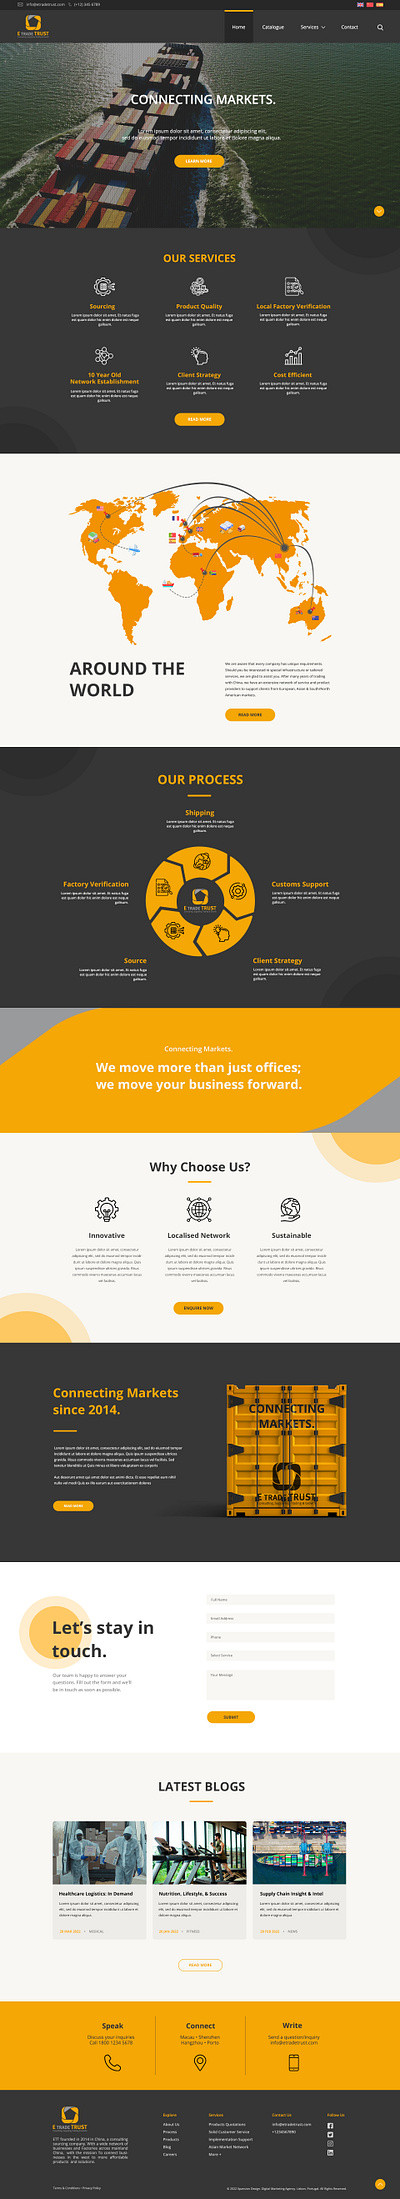 Web Design & Branding - Sourcing Business branding illustration logo style guide web design website